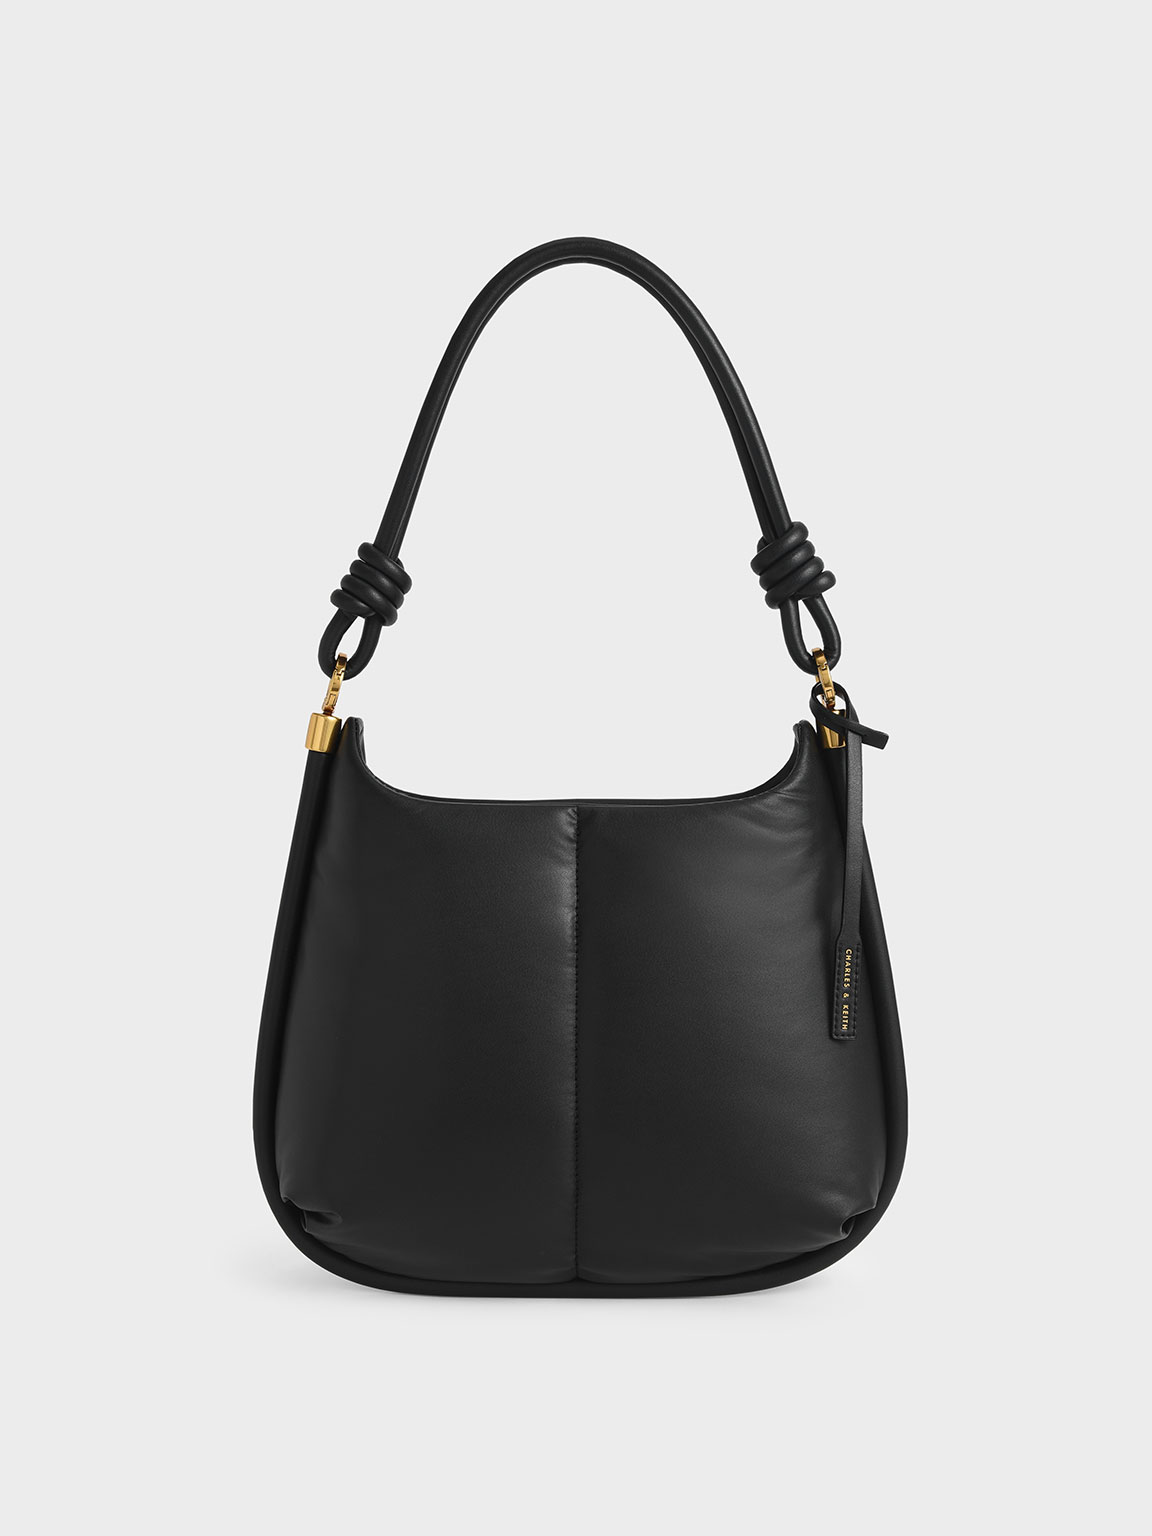 Handbags — Shop — Pili Luna